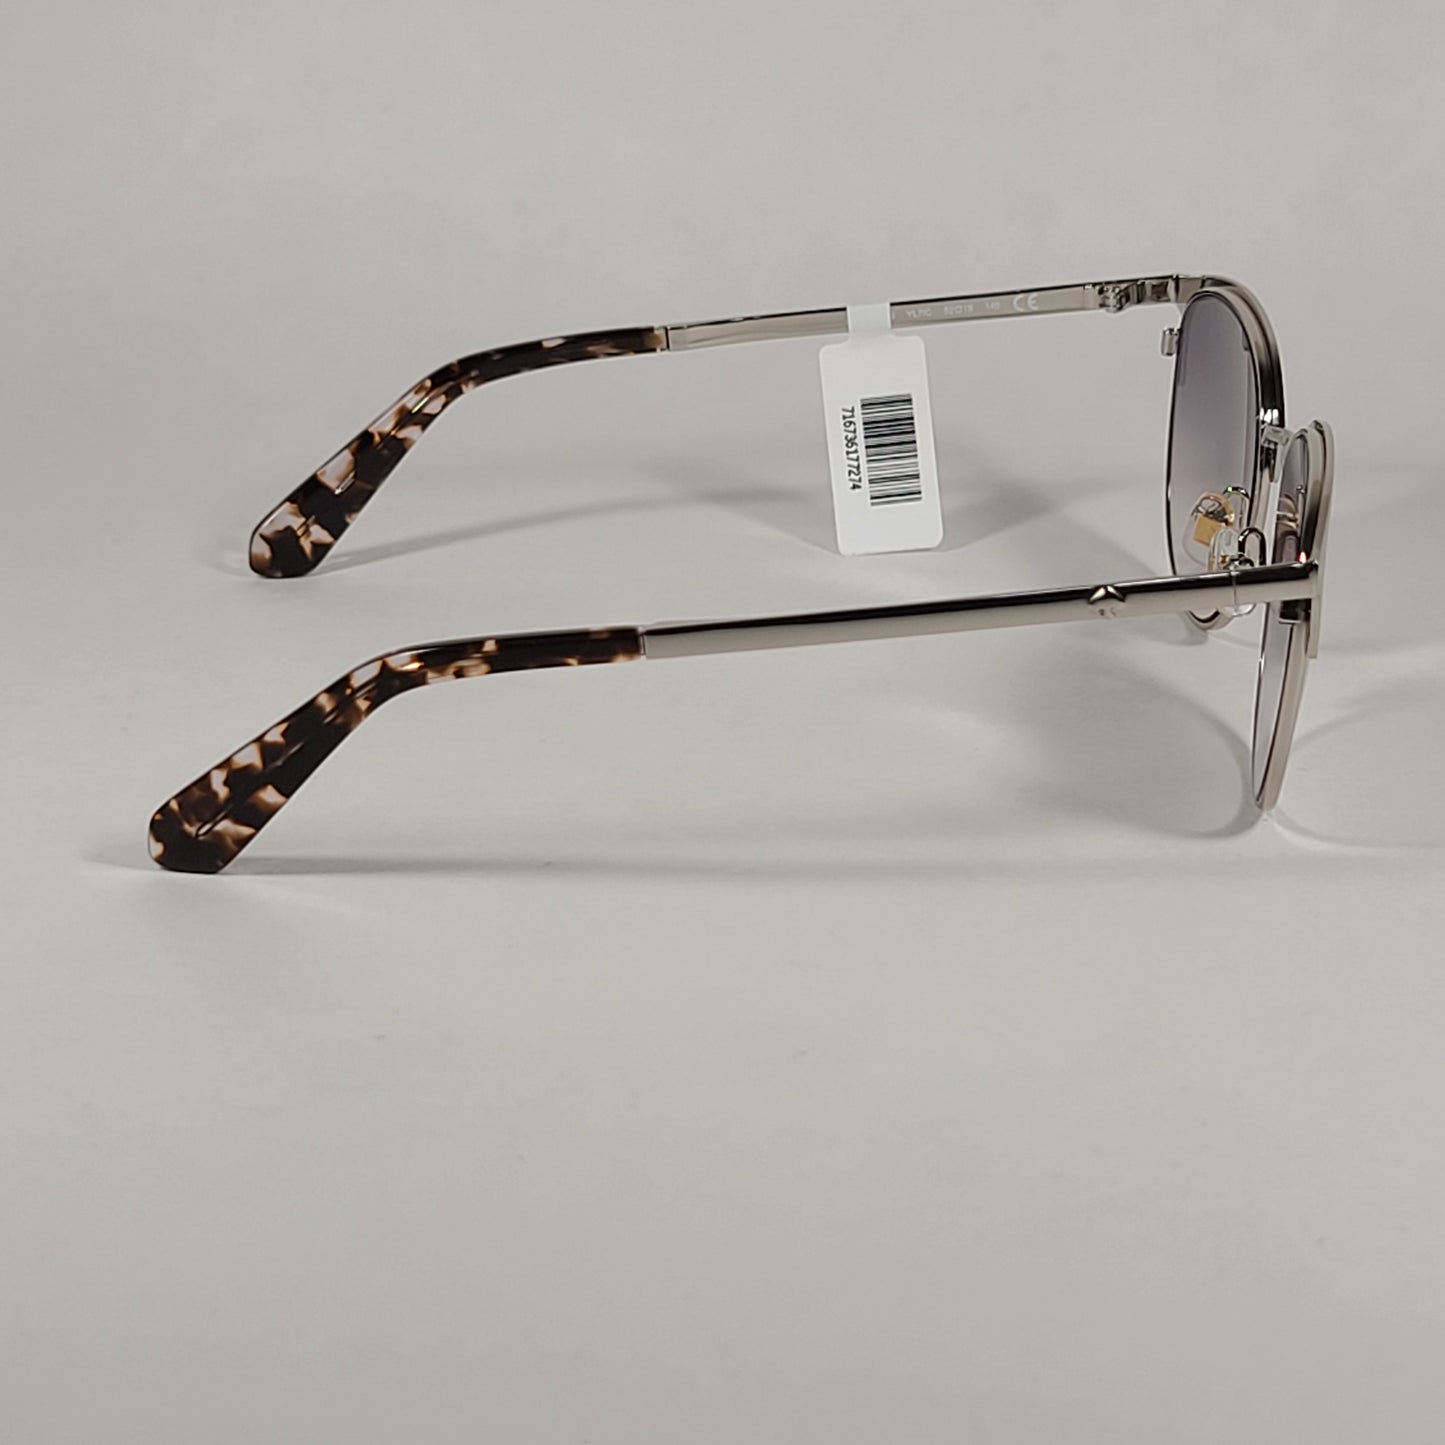 Kate Spade JOELYNN YL7IC Club Sunglasses Silver Frame Gray Gradient Lens - Sunglasses